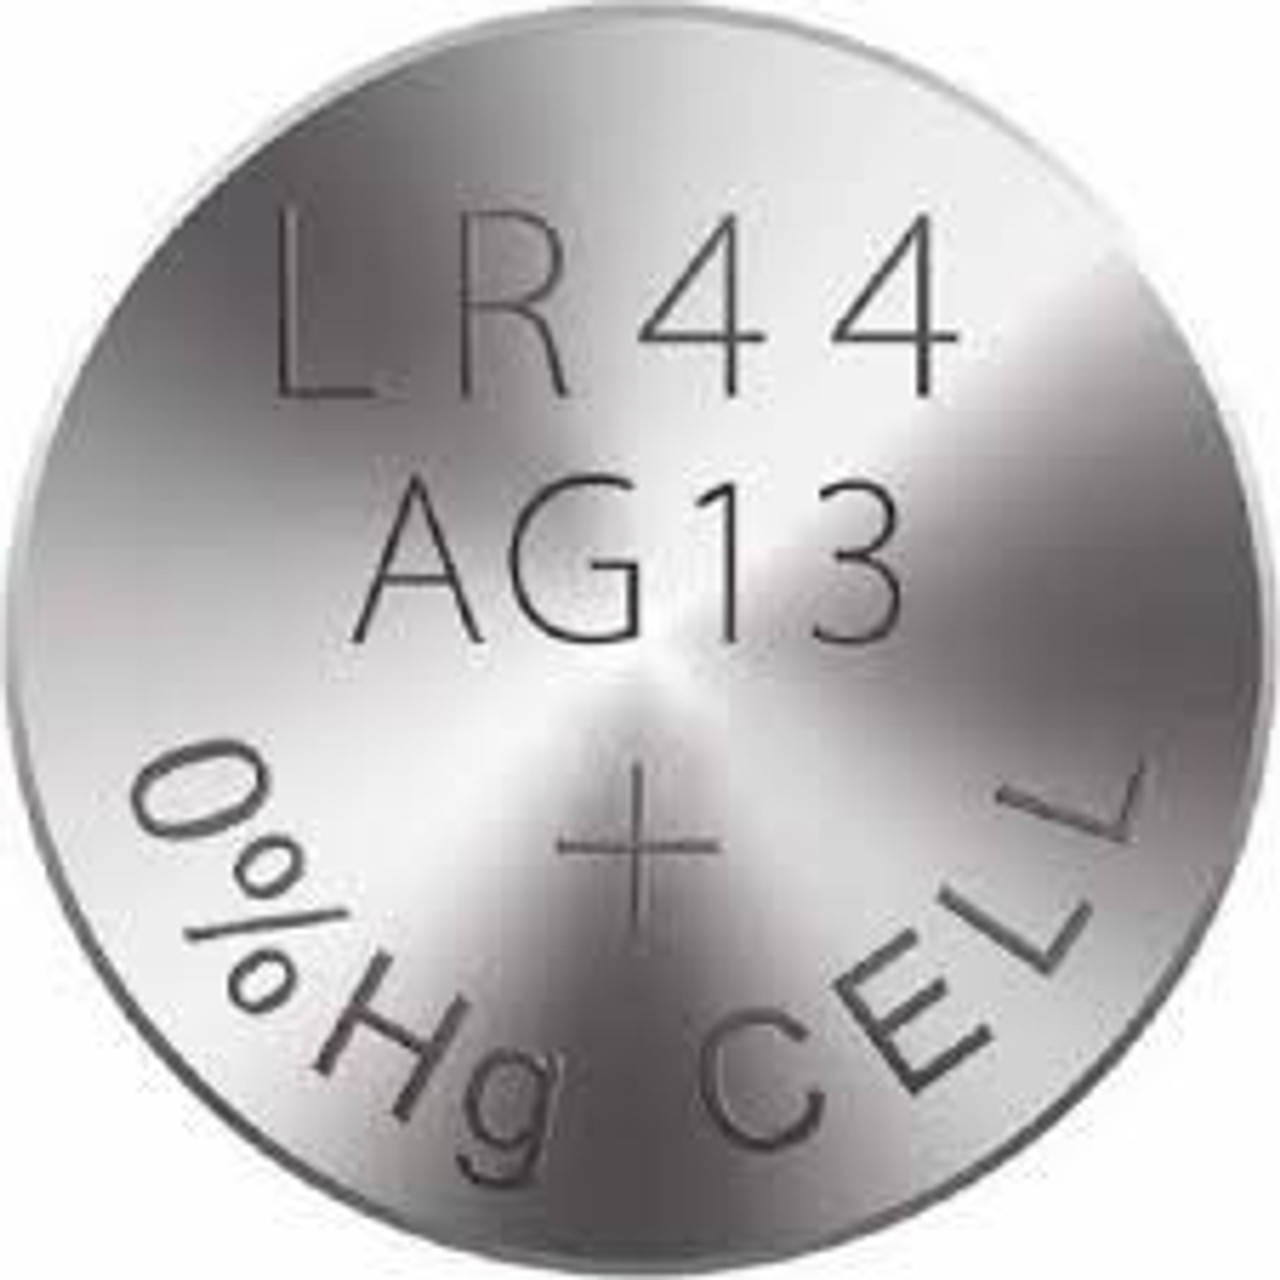 pack of 2 LR44 - AG13 1.5V Alkaline